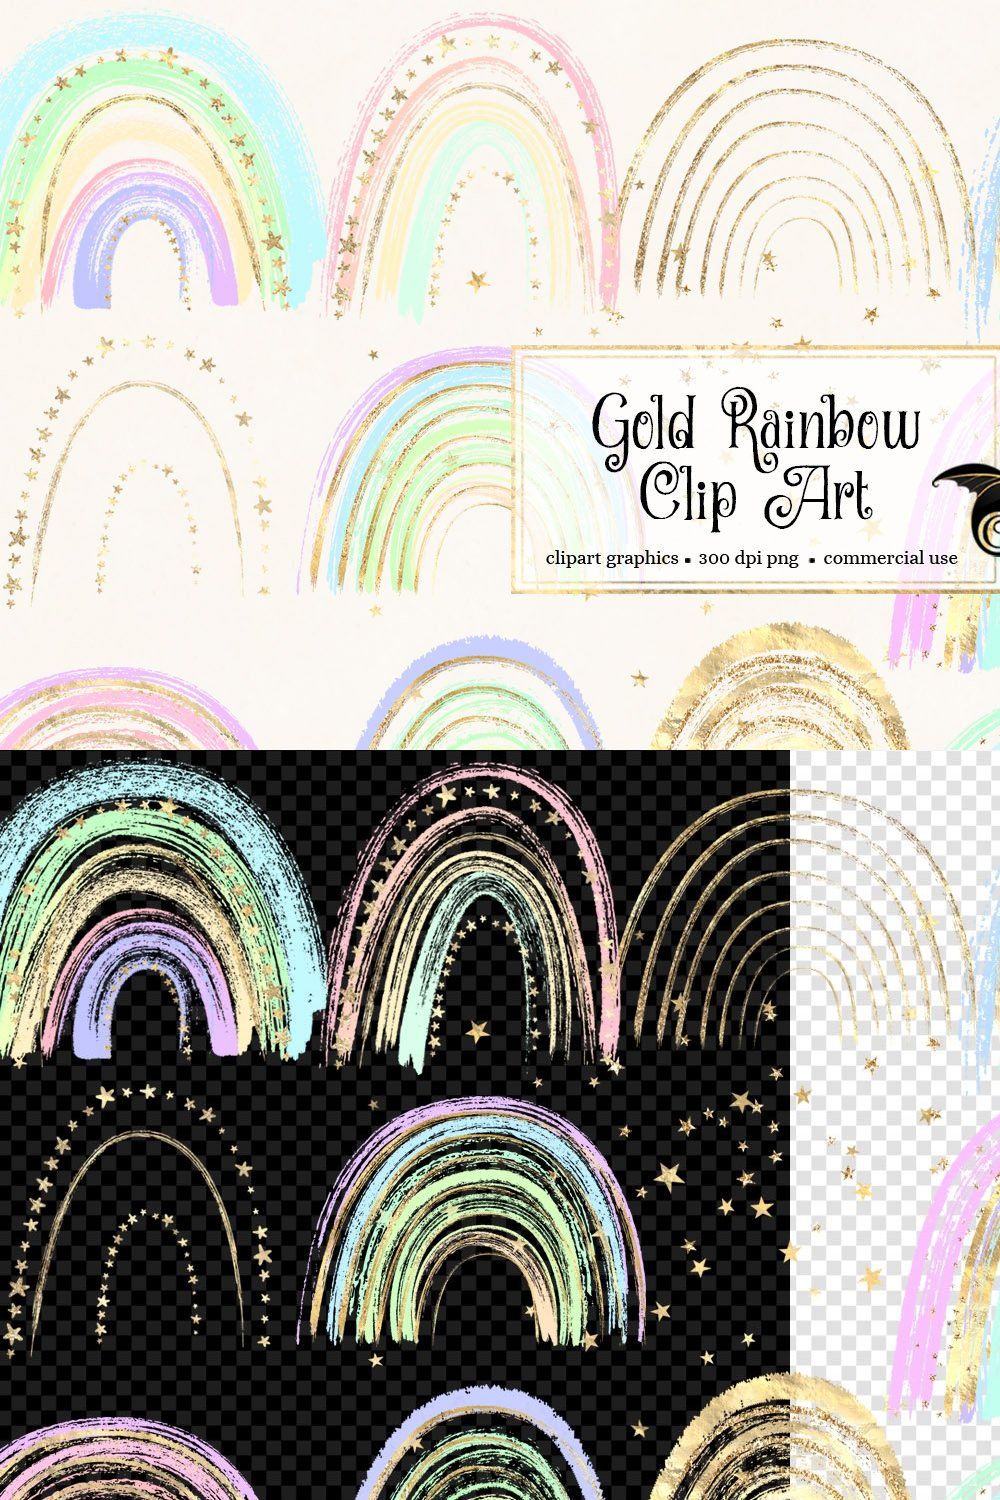 Gold Rainbows Clipart pinterest preview image.